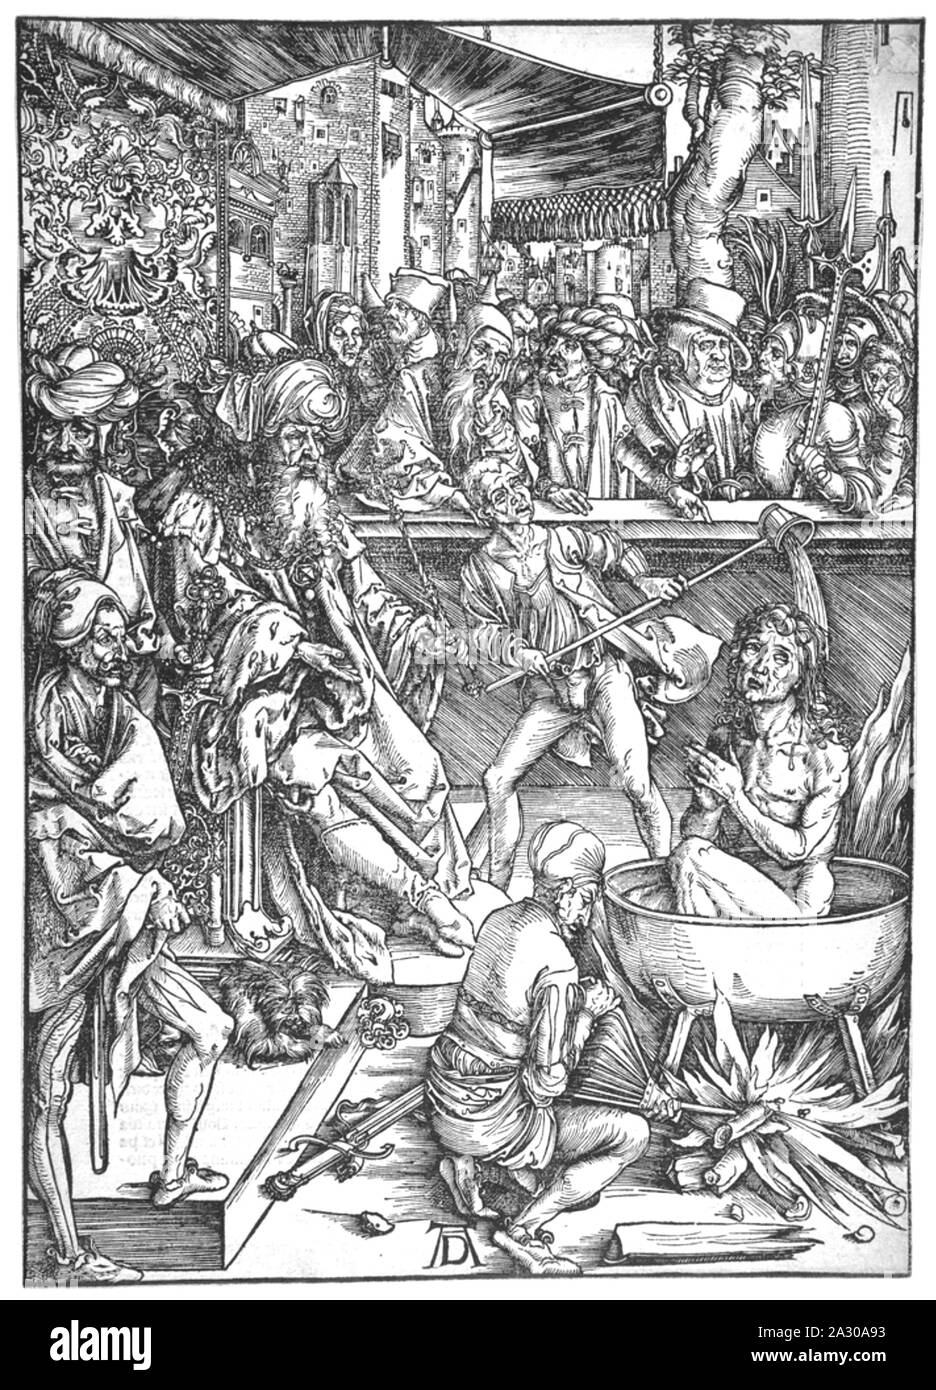 ALBRECHT DÜRER (1471-1528) German artist. Wood engraving of the martyrdom of St. John. Stock Photo